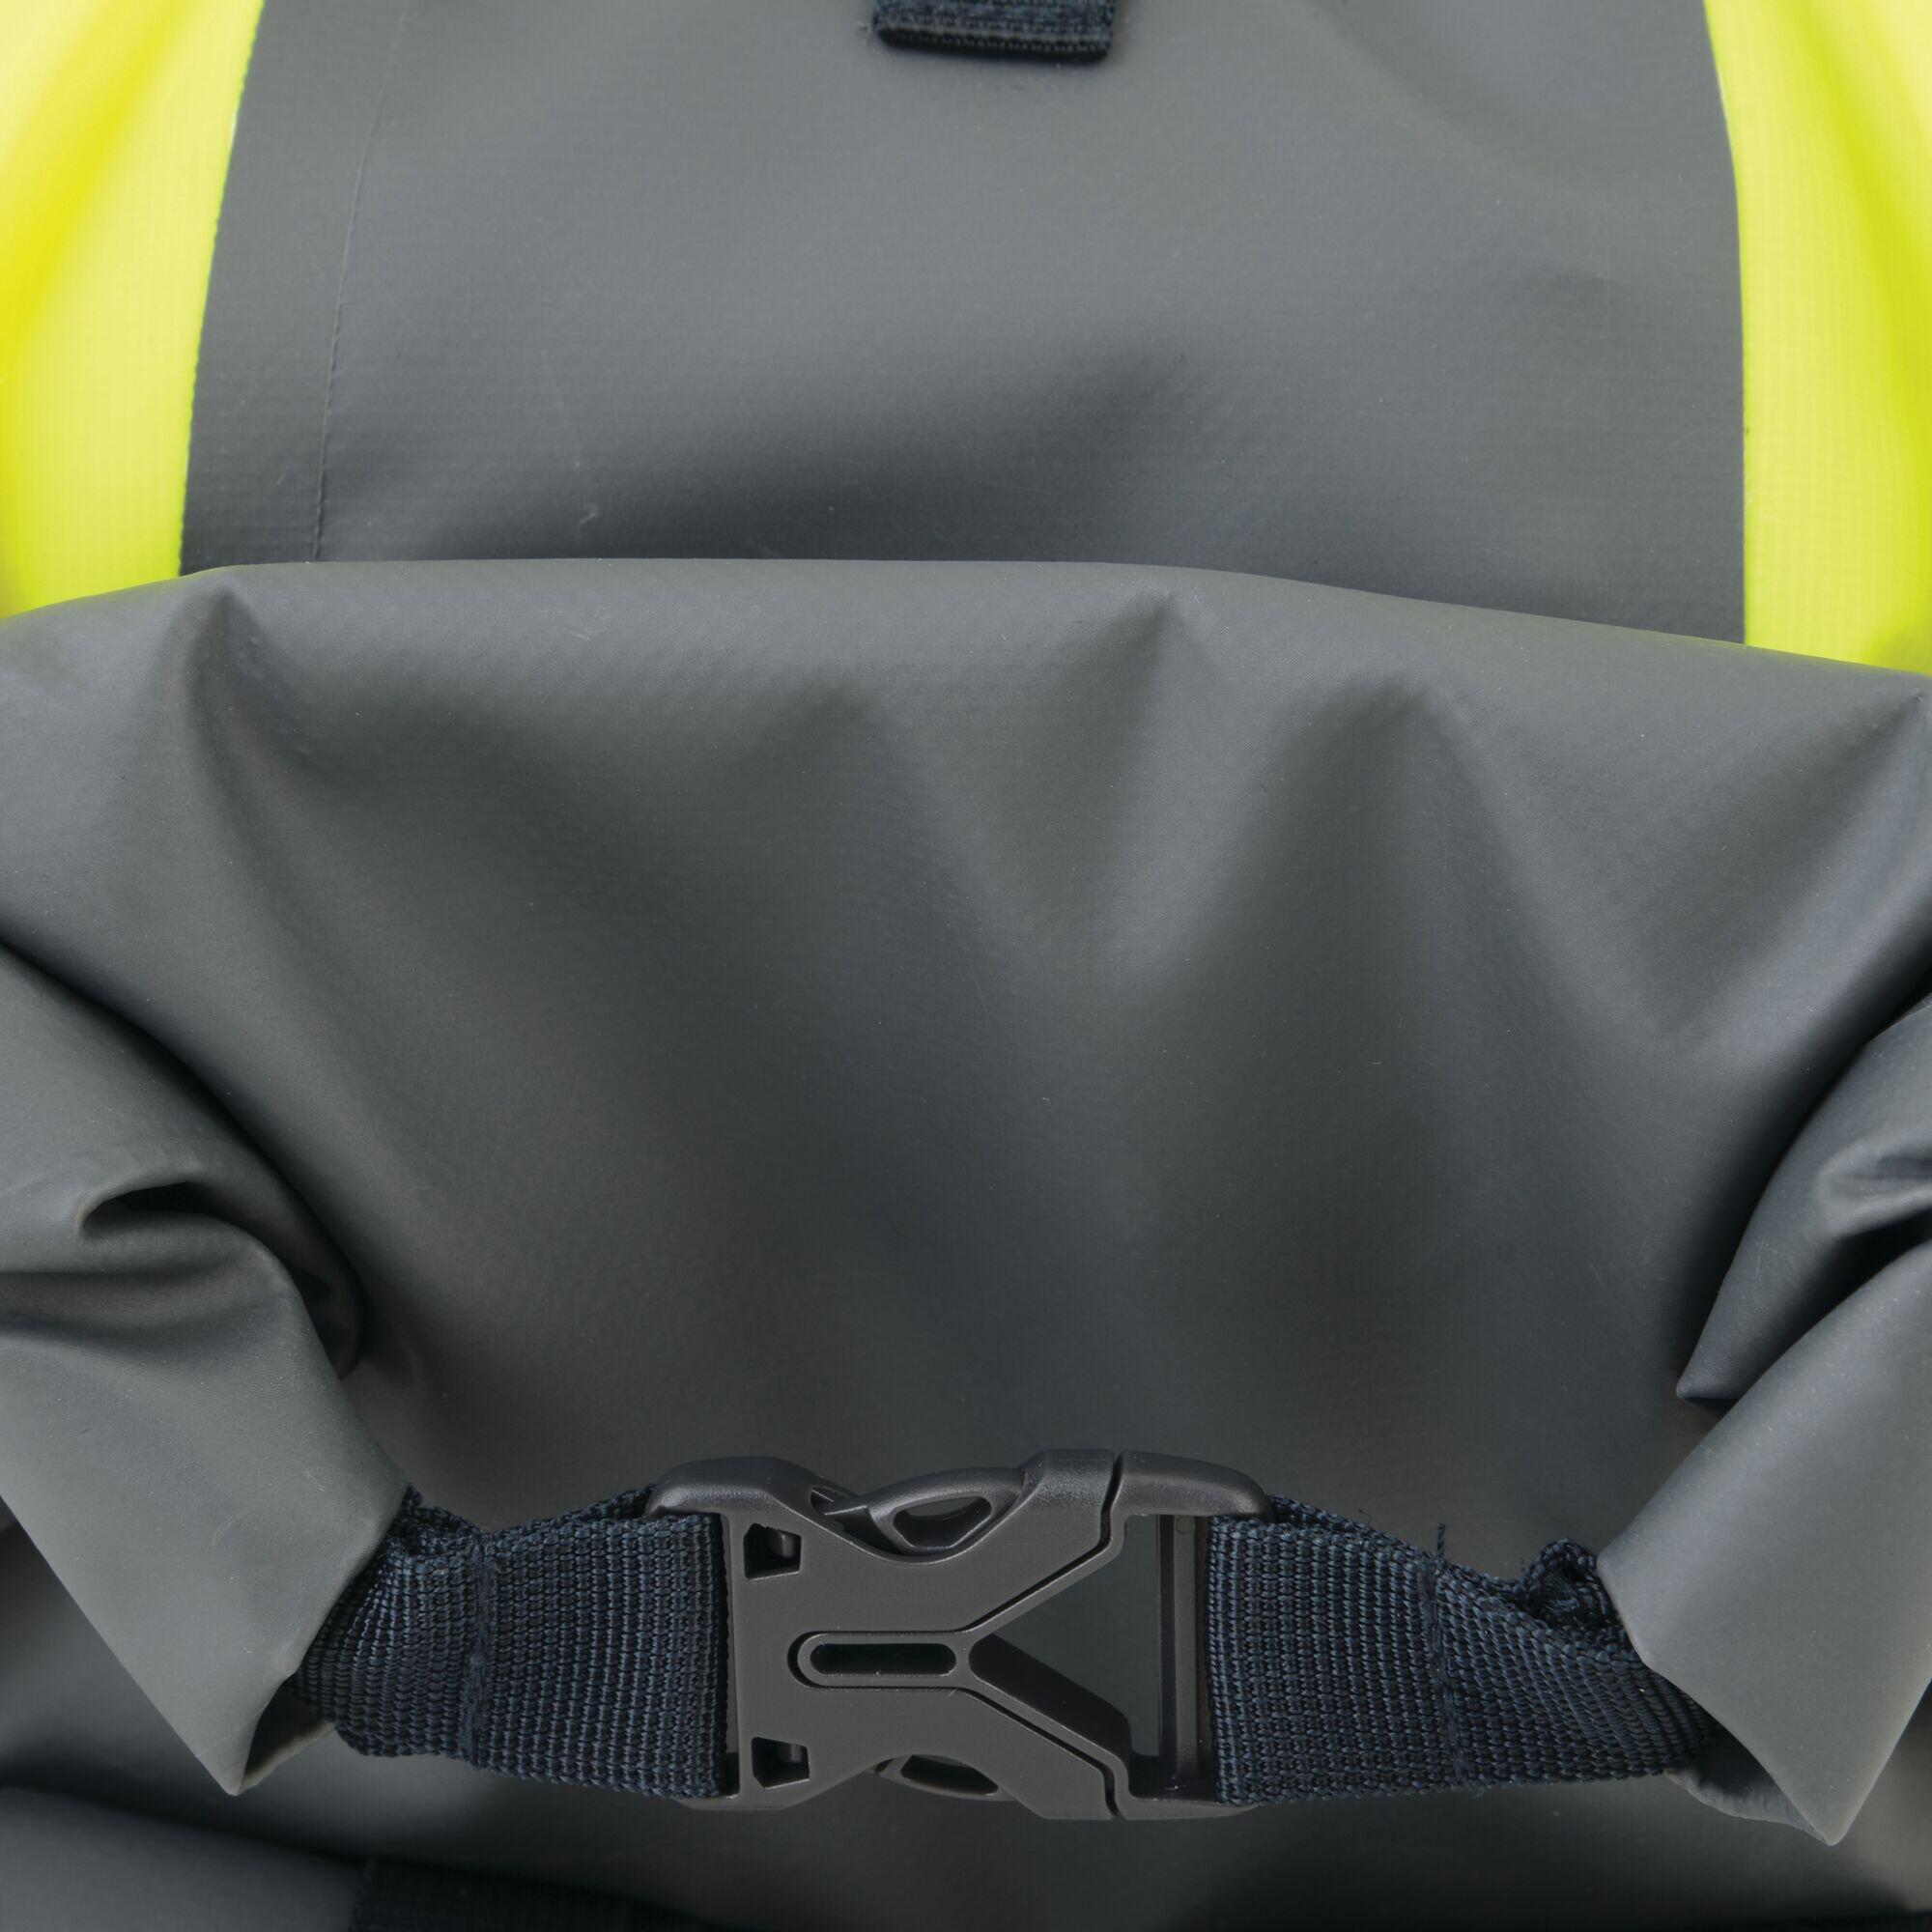 Ardus Adults' Hiking 30 Litre Waterproof Backpack - Neon Yellow/Grey 4/7